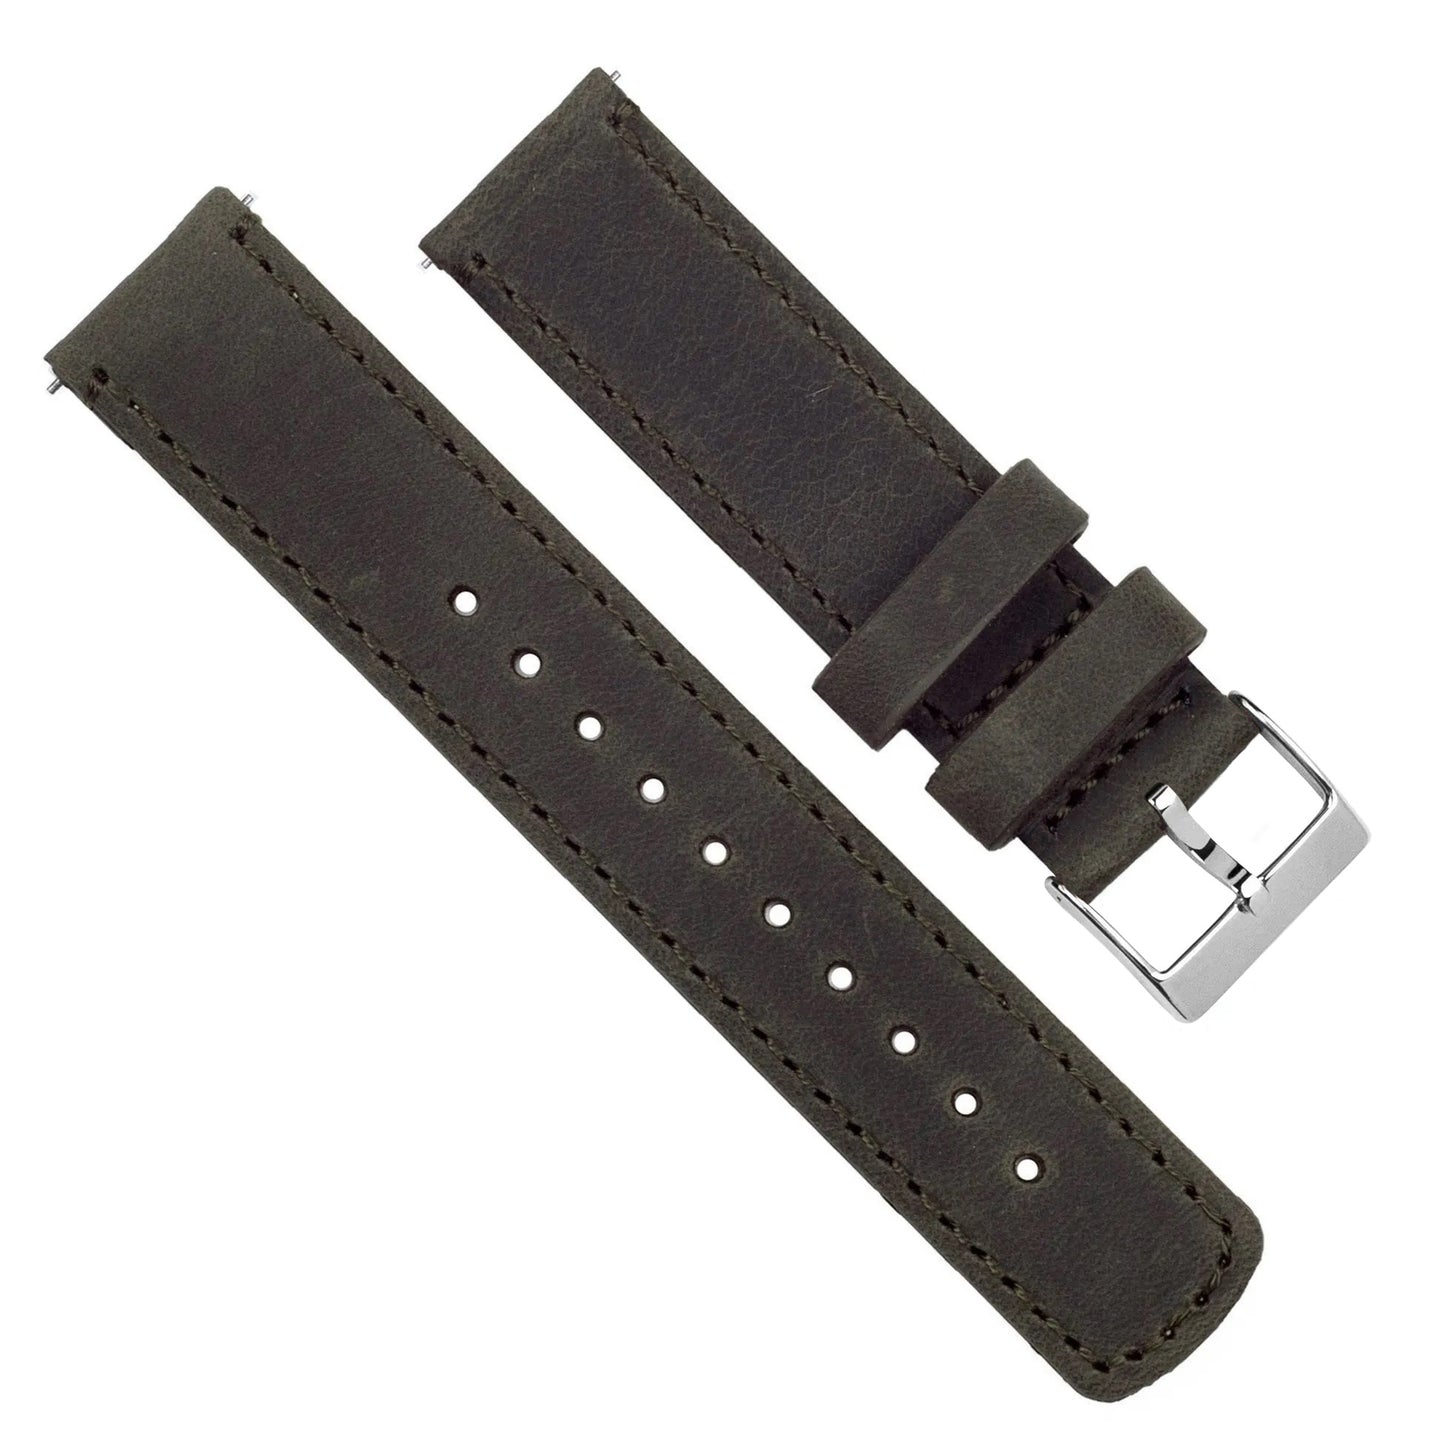 Samsung Galaxy Watch3 | Espresso Brown Leather & Stitching - Barton Watch Bands